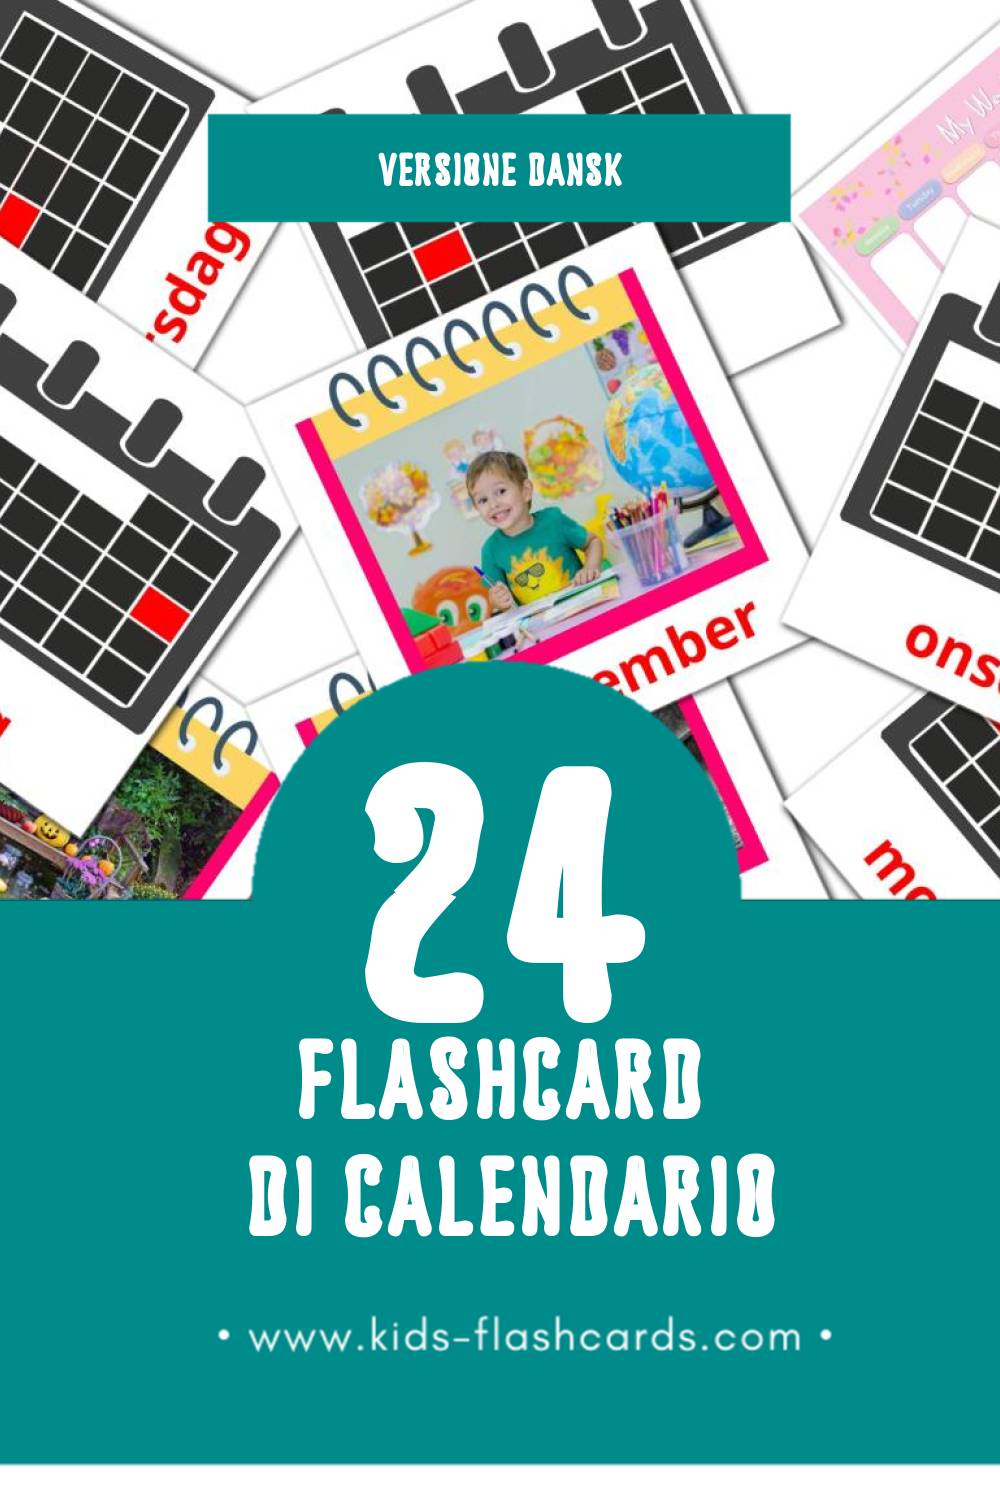 Schede visive sugli Kalender per bambini (24 schede in Dansk)